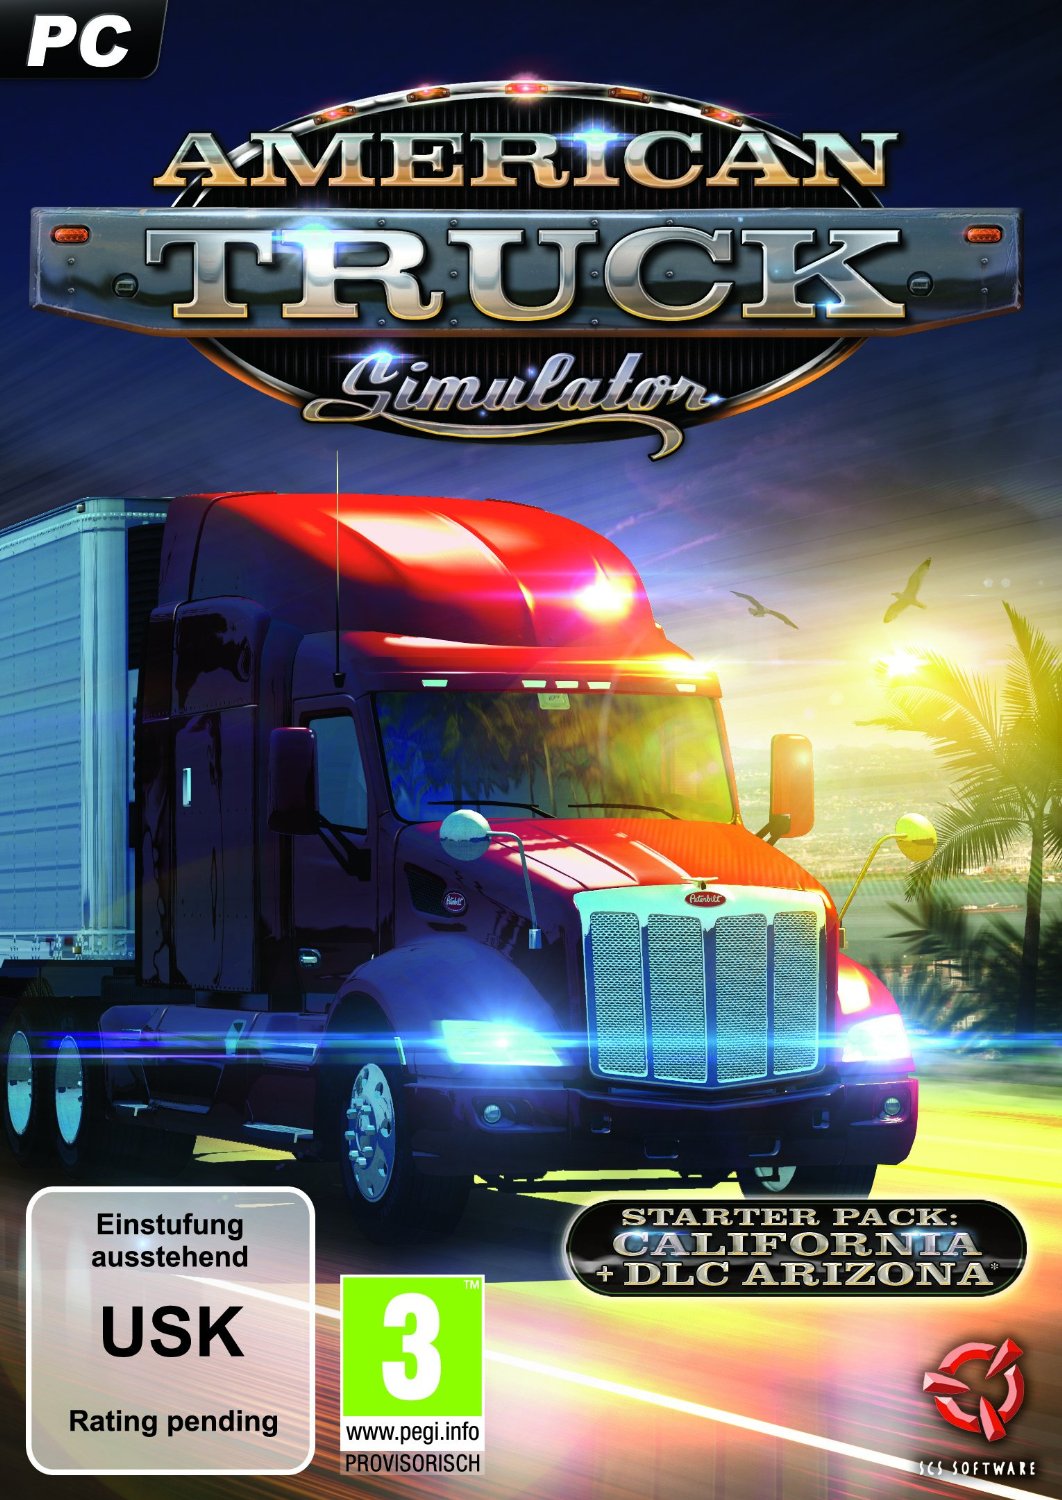 american-truck-simulator-key-generator-free-keygenforgamesoft-games-online